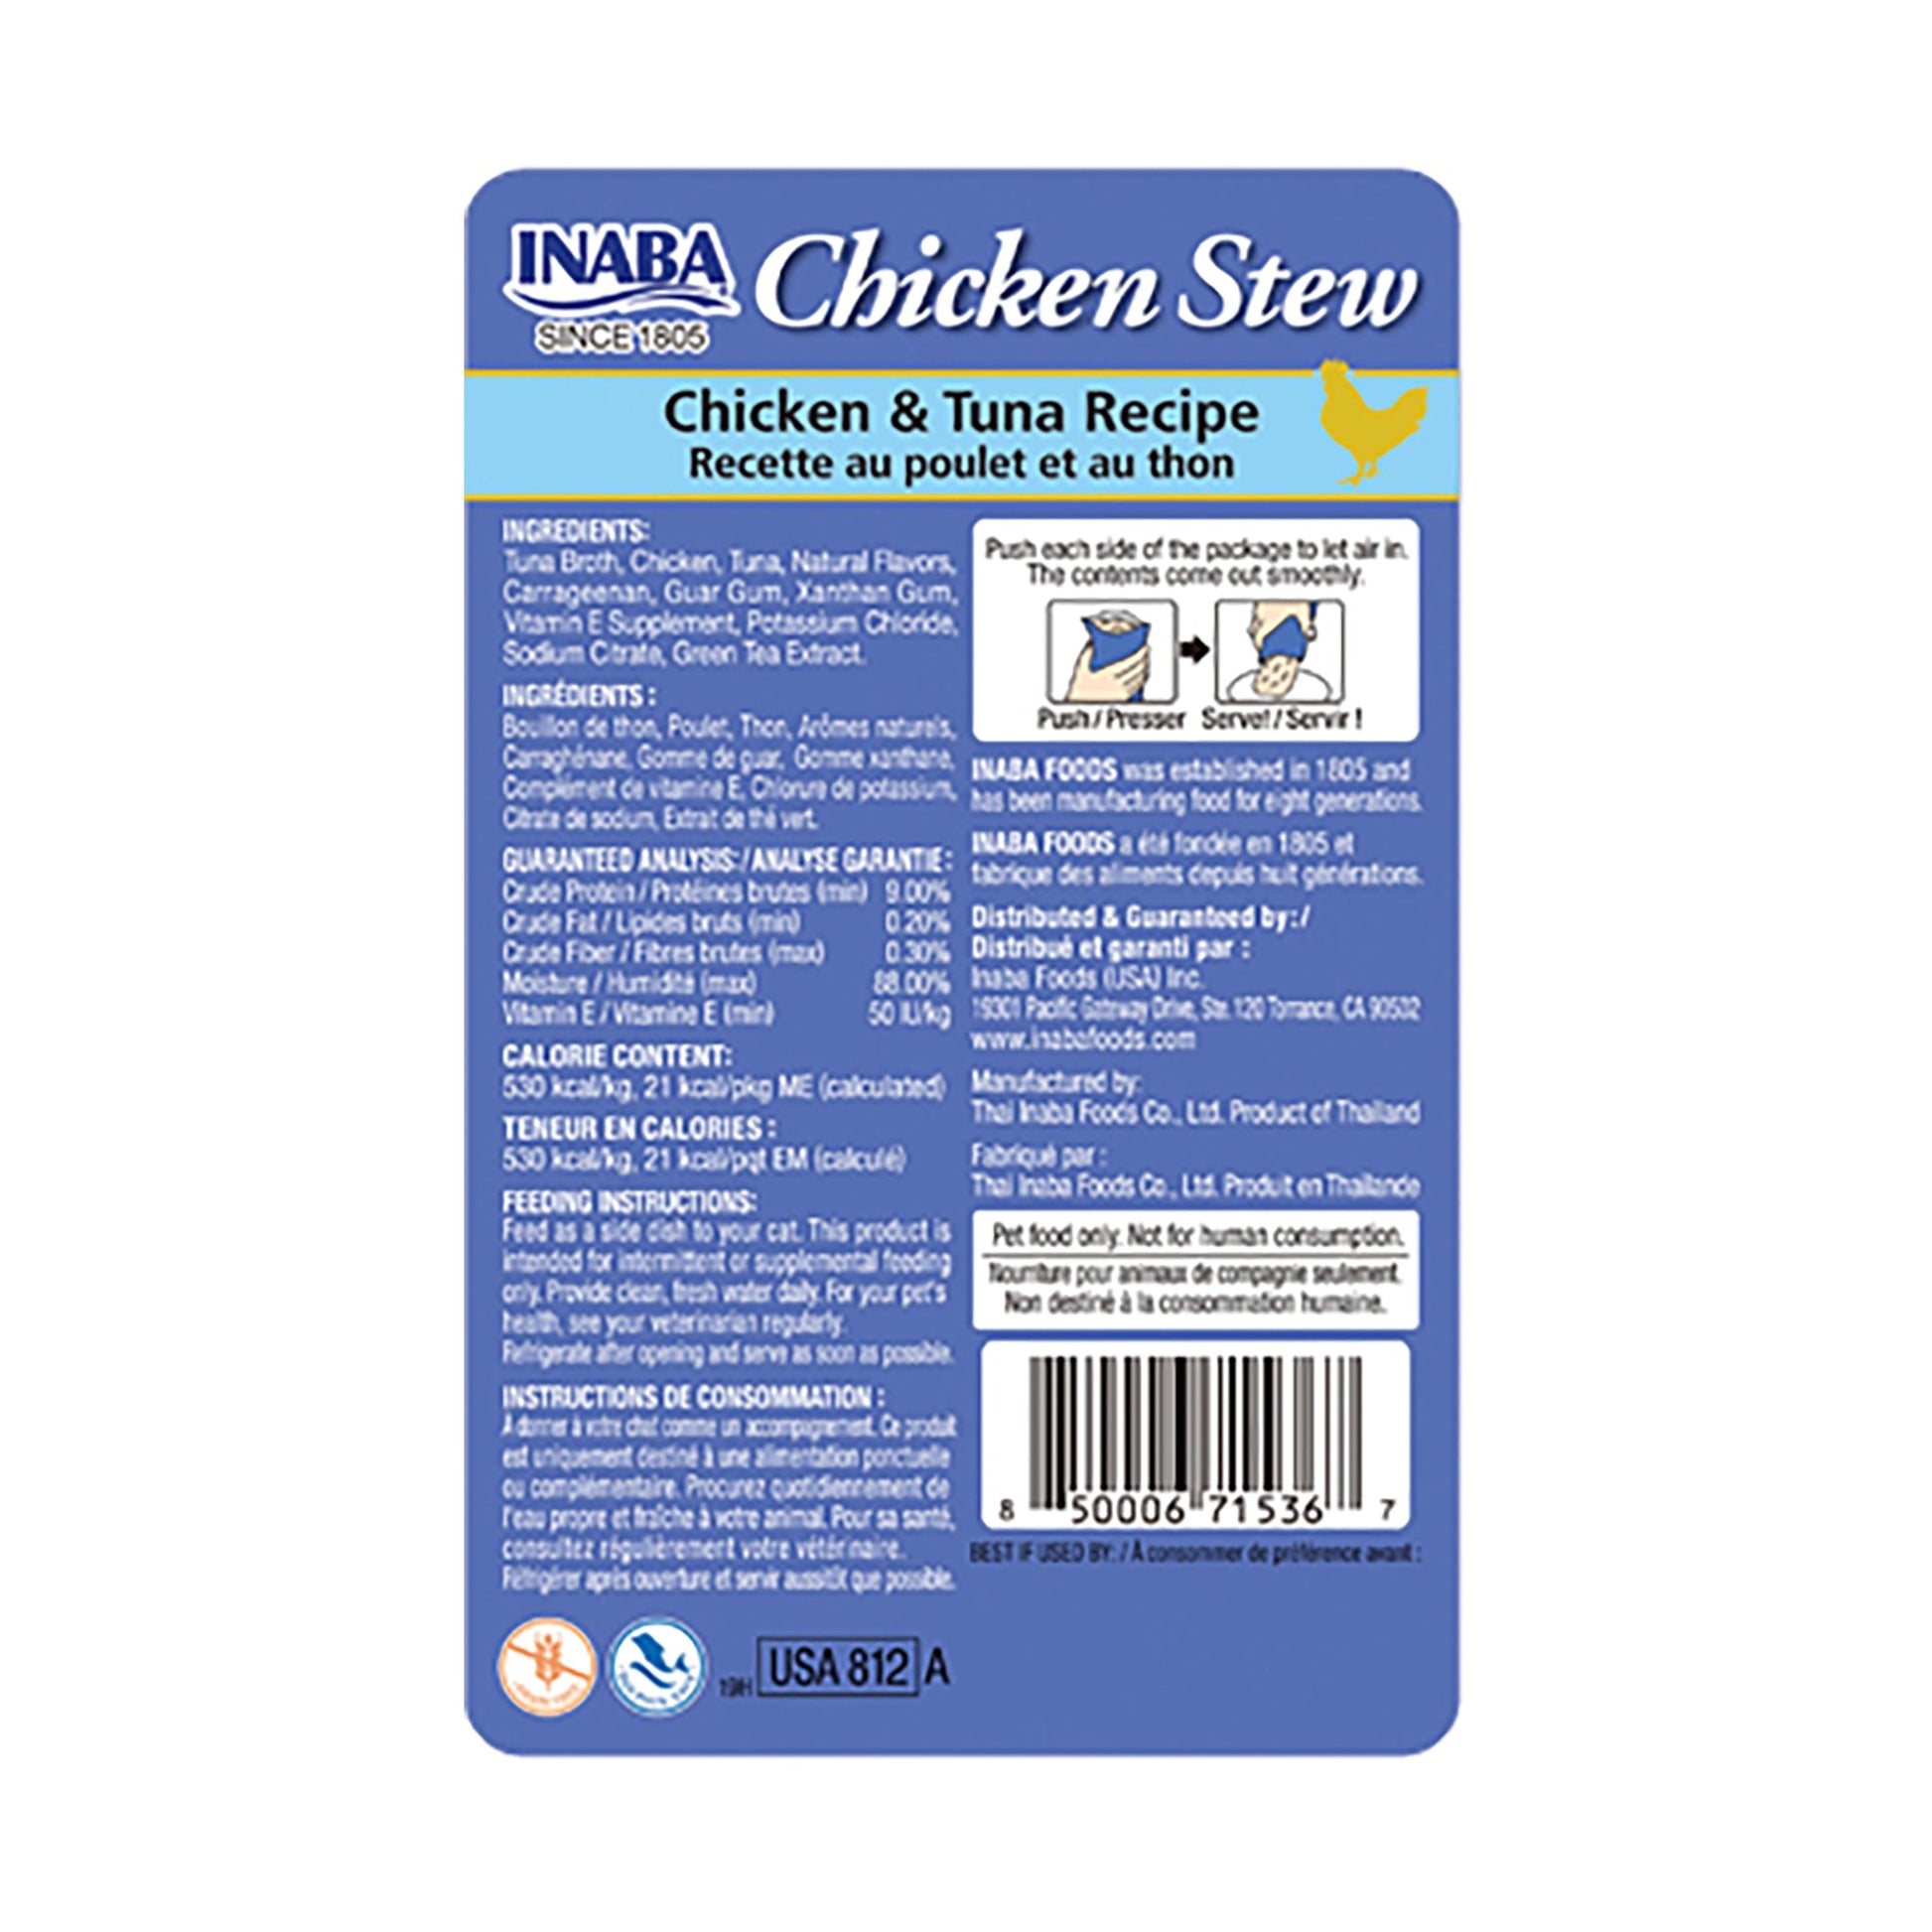 INABA CHICKEN STEW with Chicken & Tuna Recipe - Pet Merit StoreINABA CHICKEN STEW with Chicken & Tuna Recipe